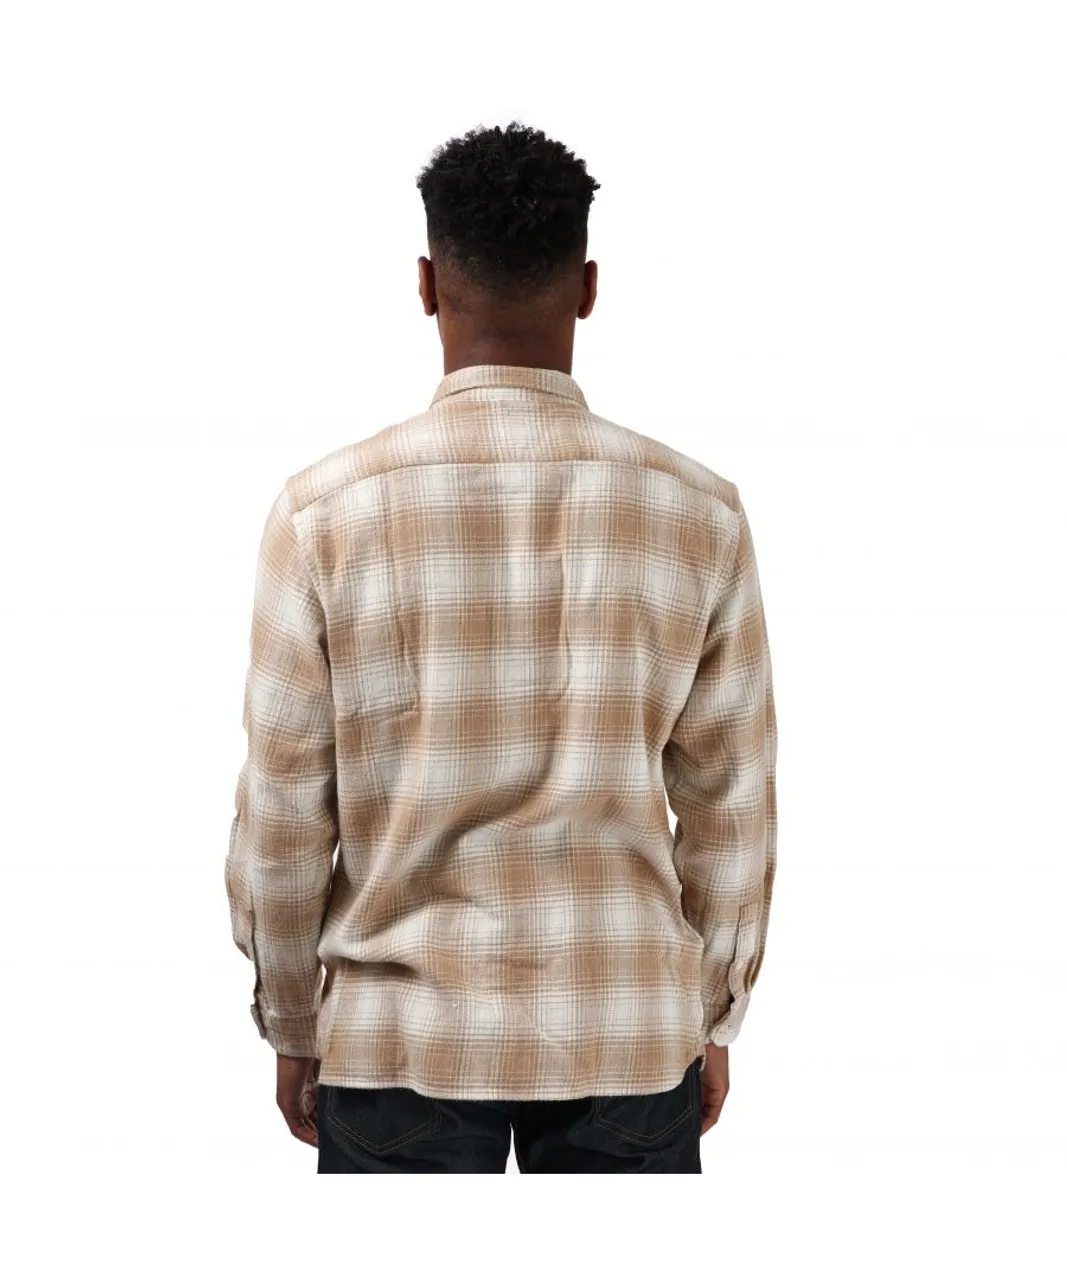 Levi's Mens Levis Jackson Worker Flannel Overshirt in Beige Cotton